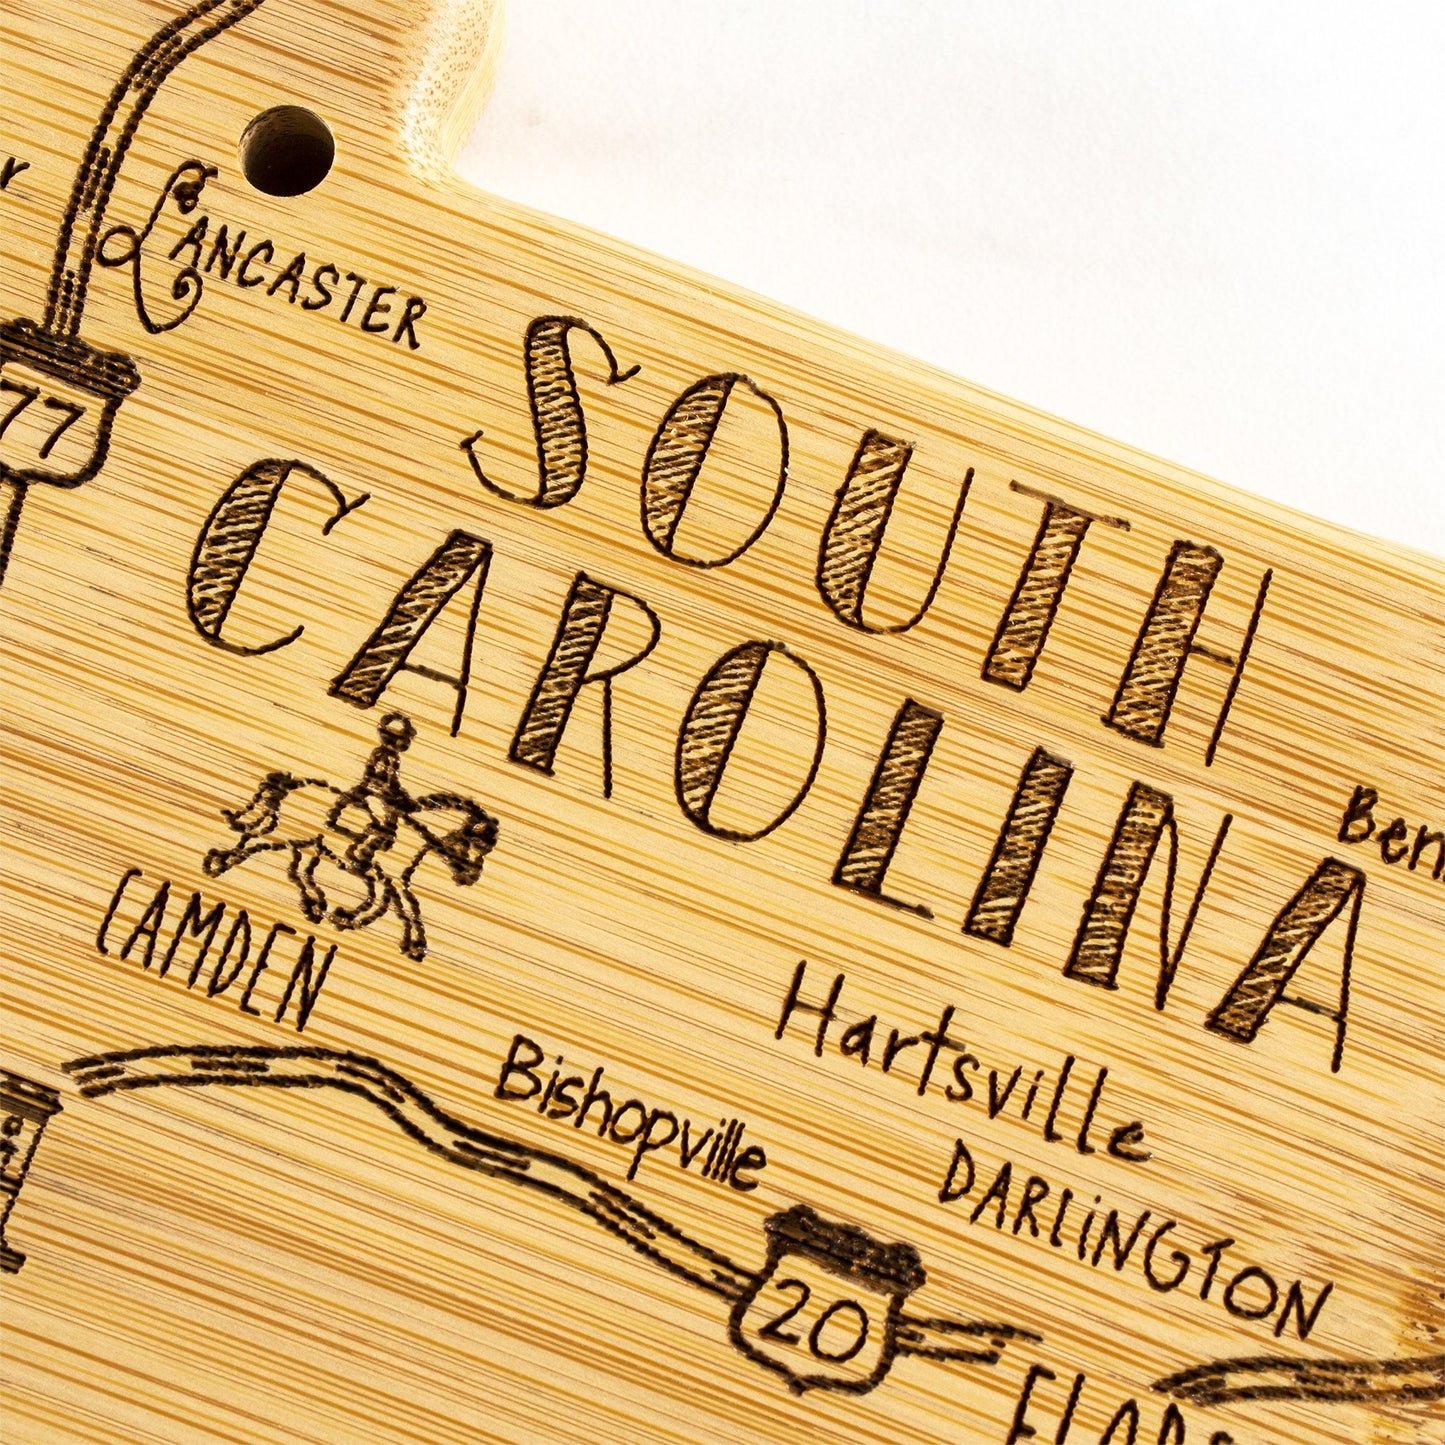 Destination South Carolina Board